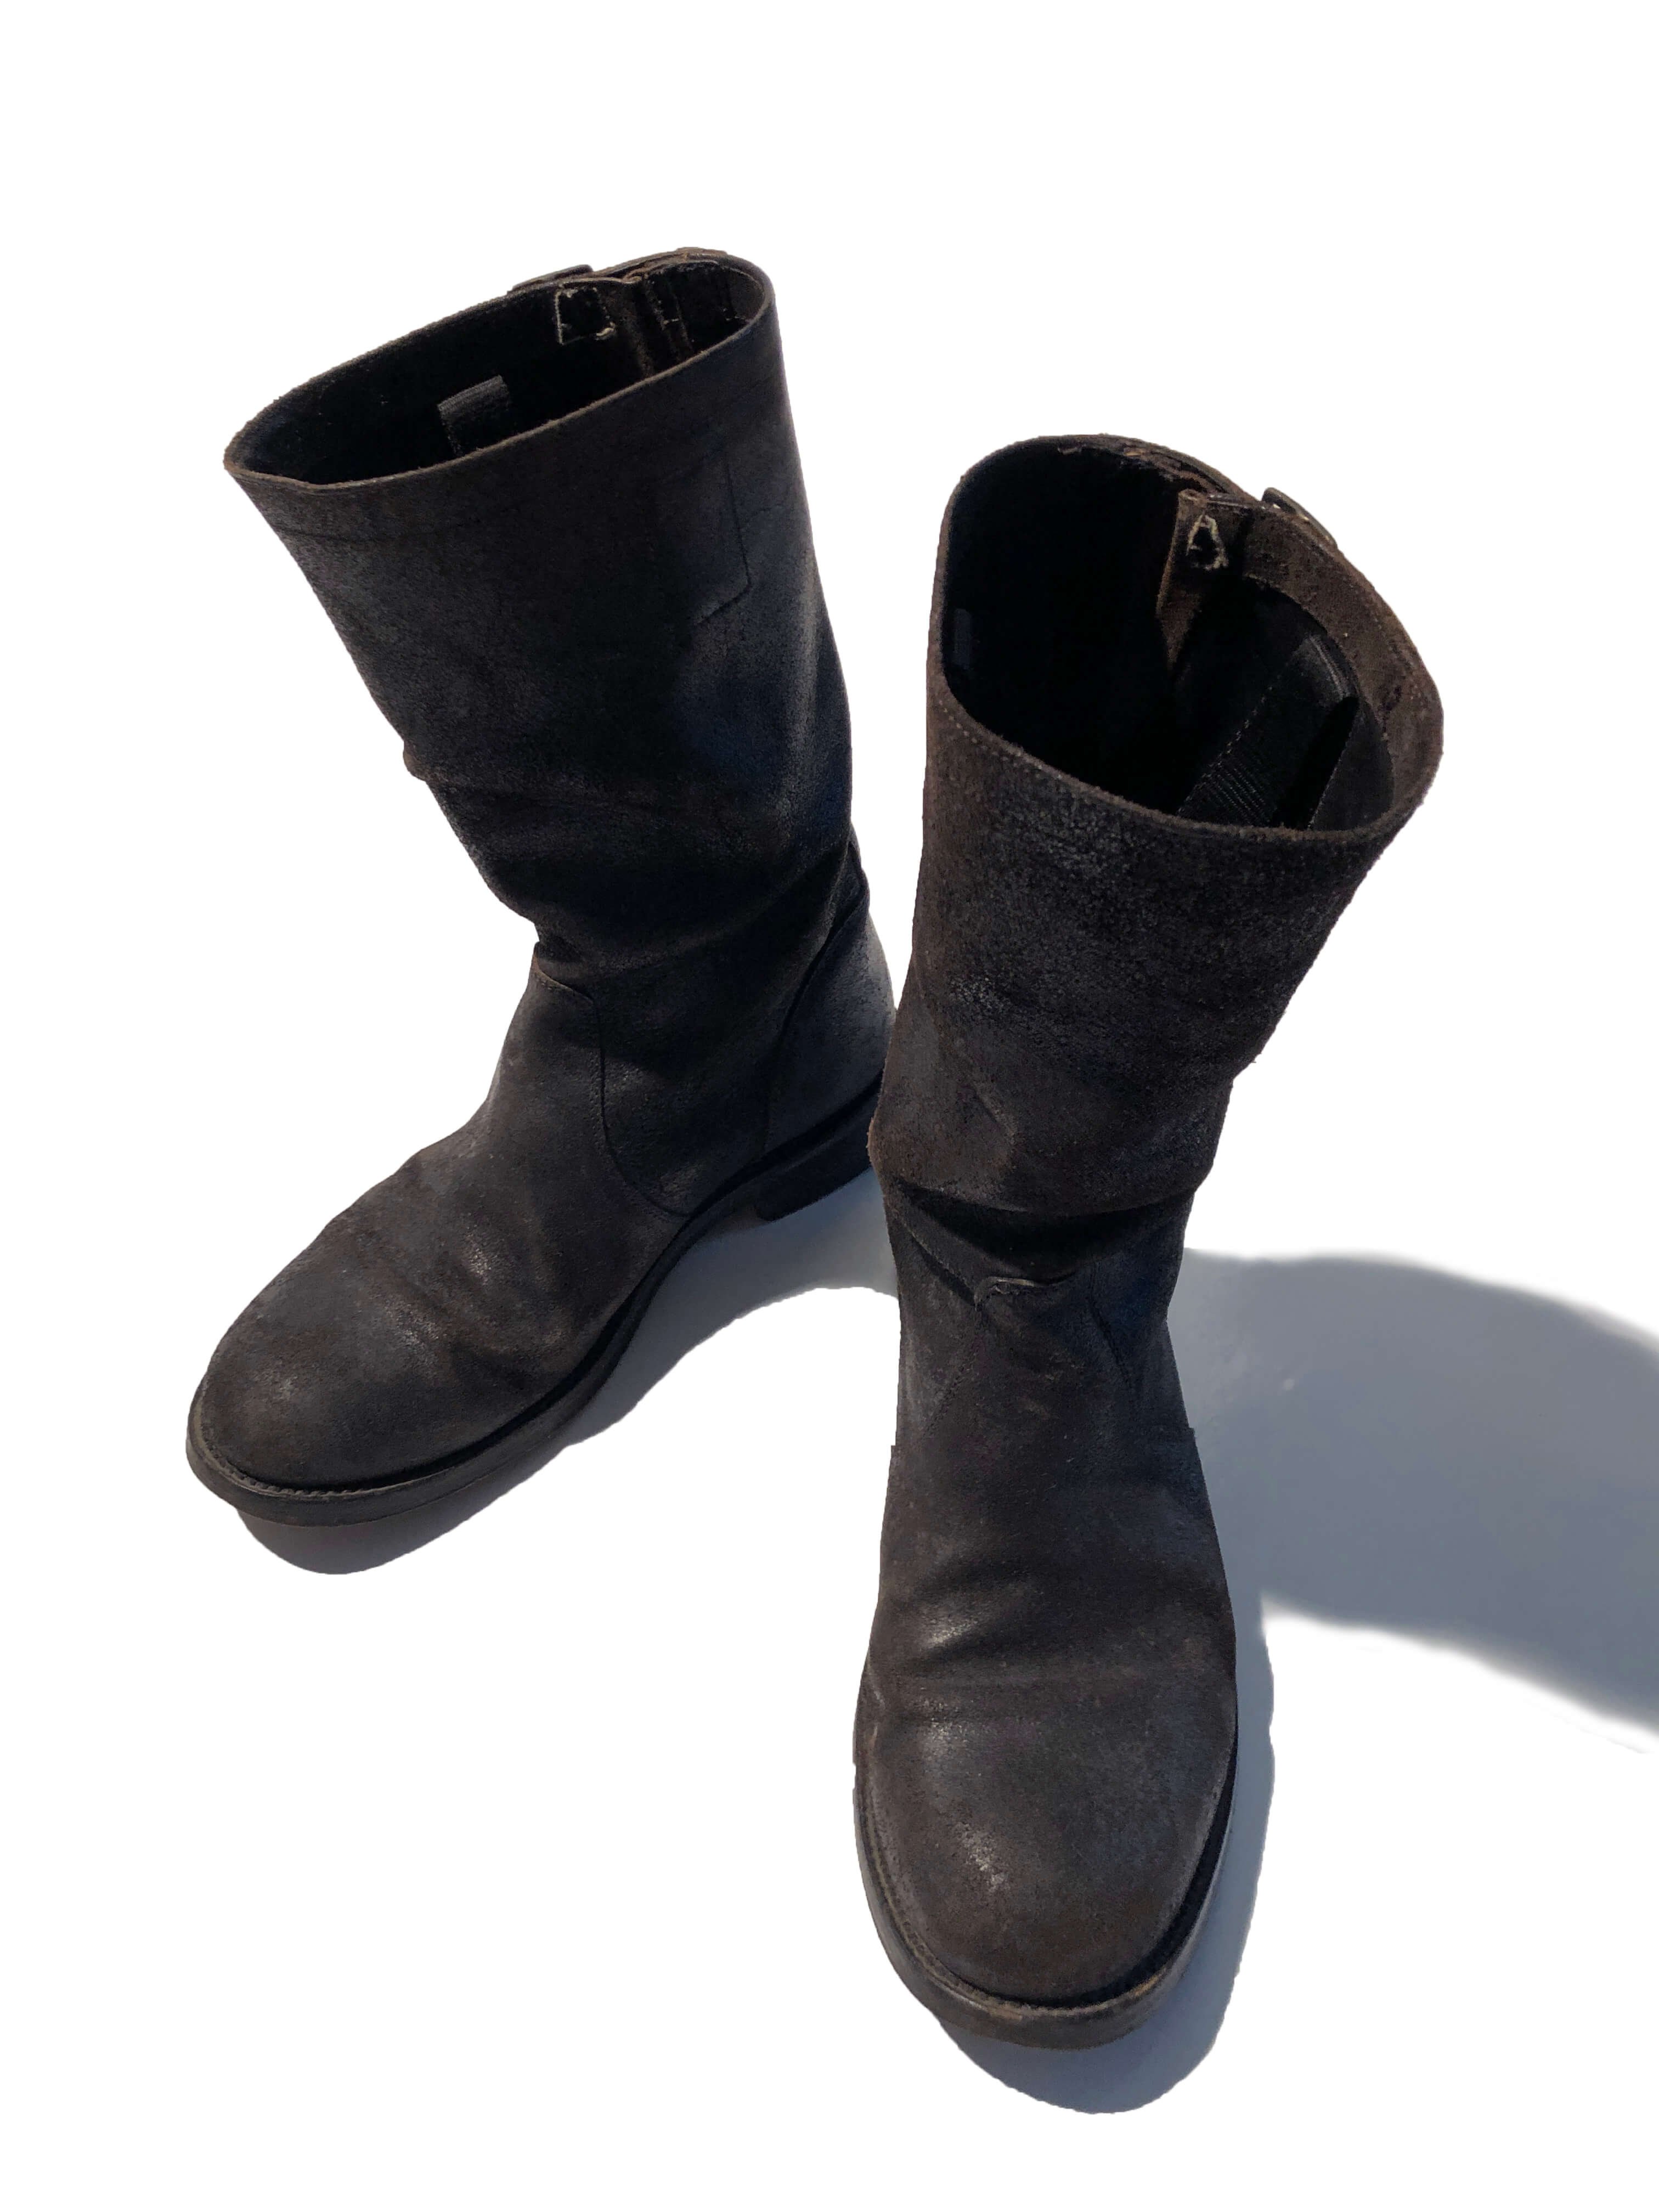 John varvatos cracked leather engineered boots